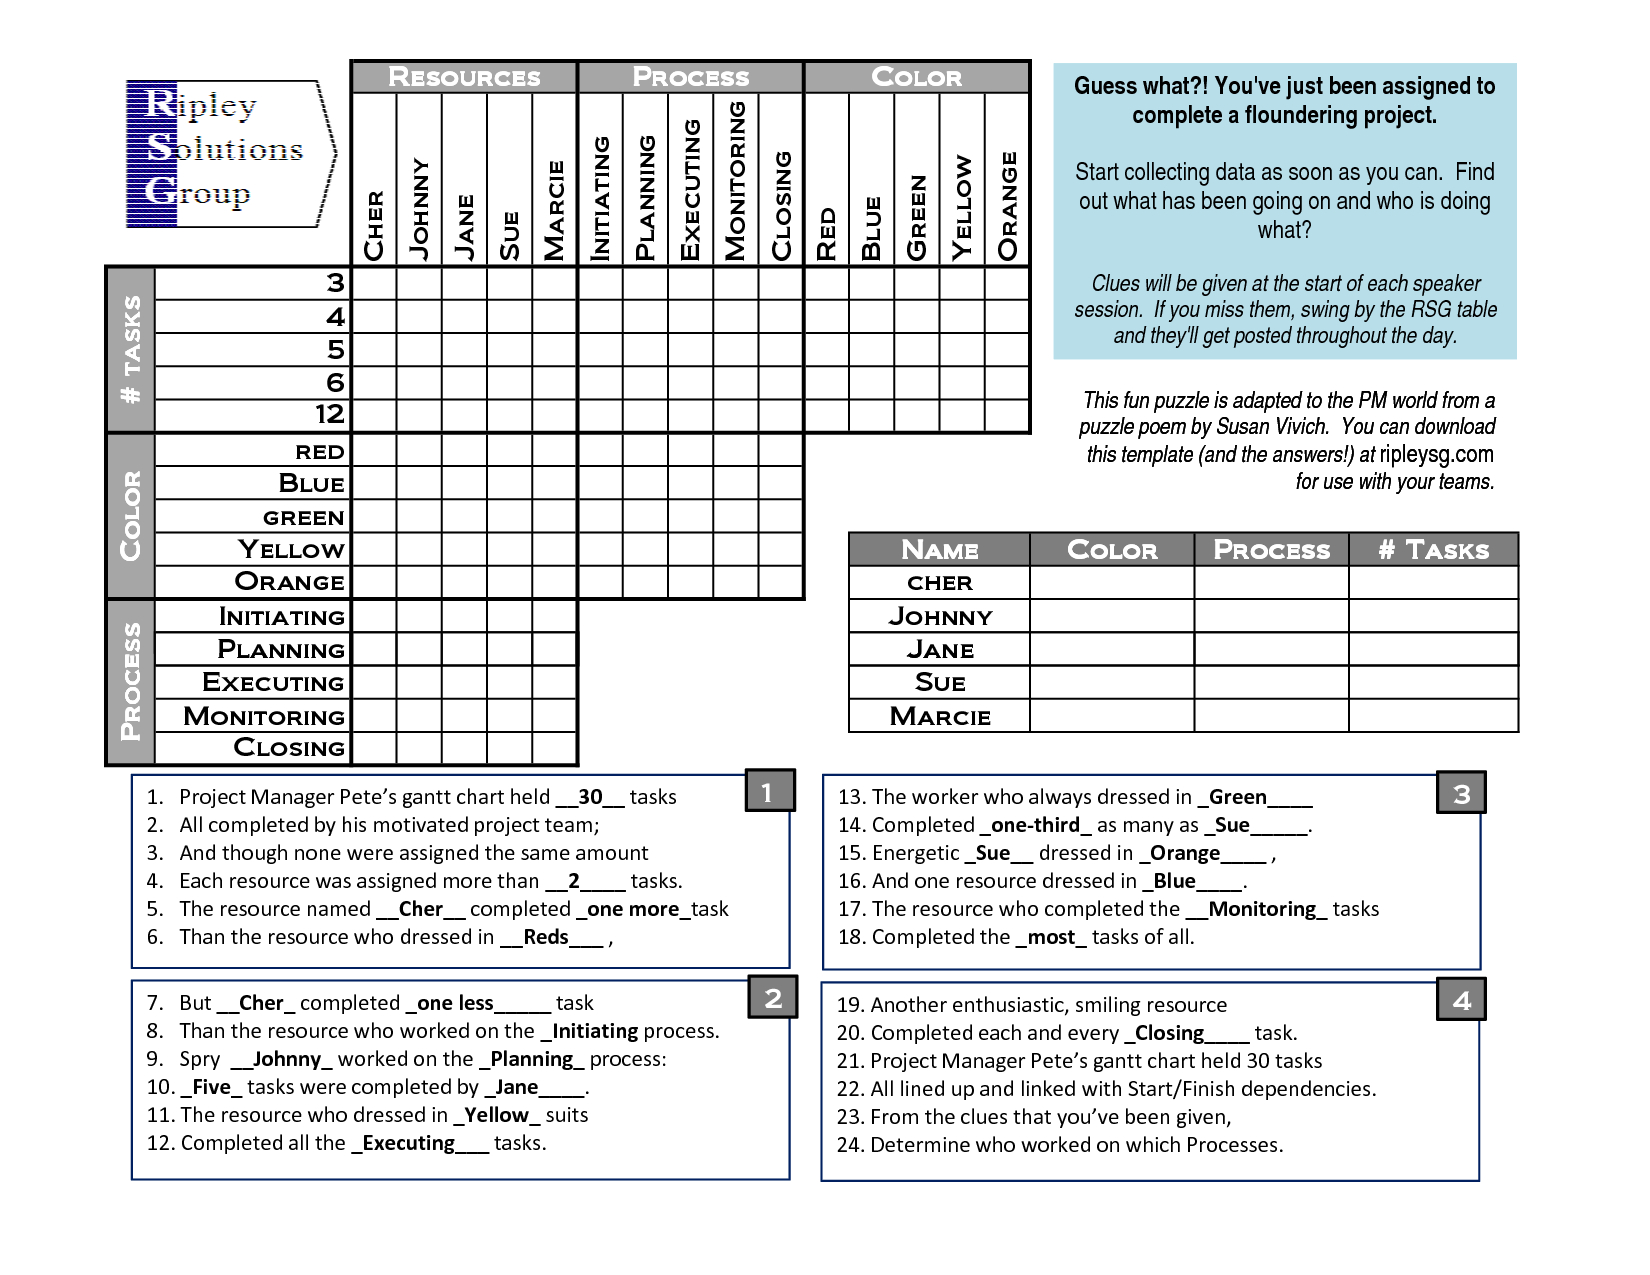 Logic Puzzles Printable Worksheets Printable Worksheets